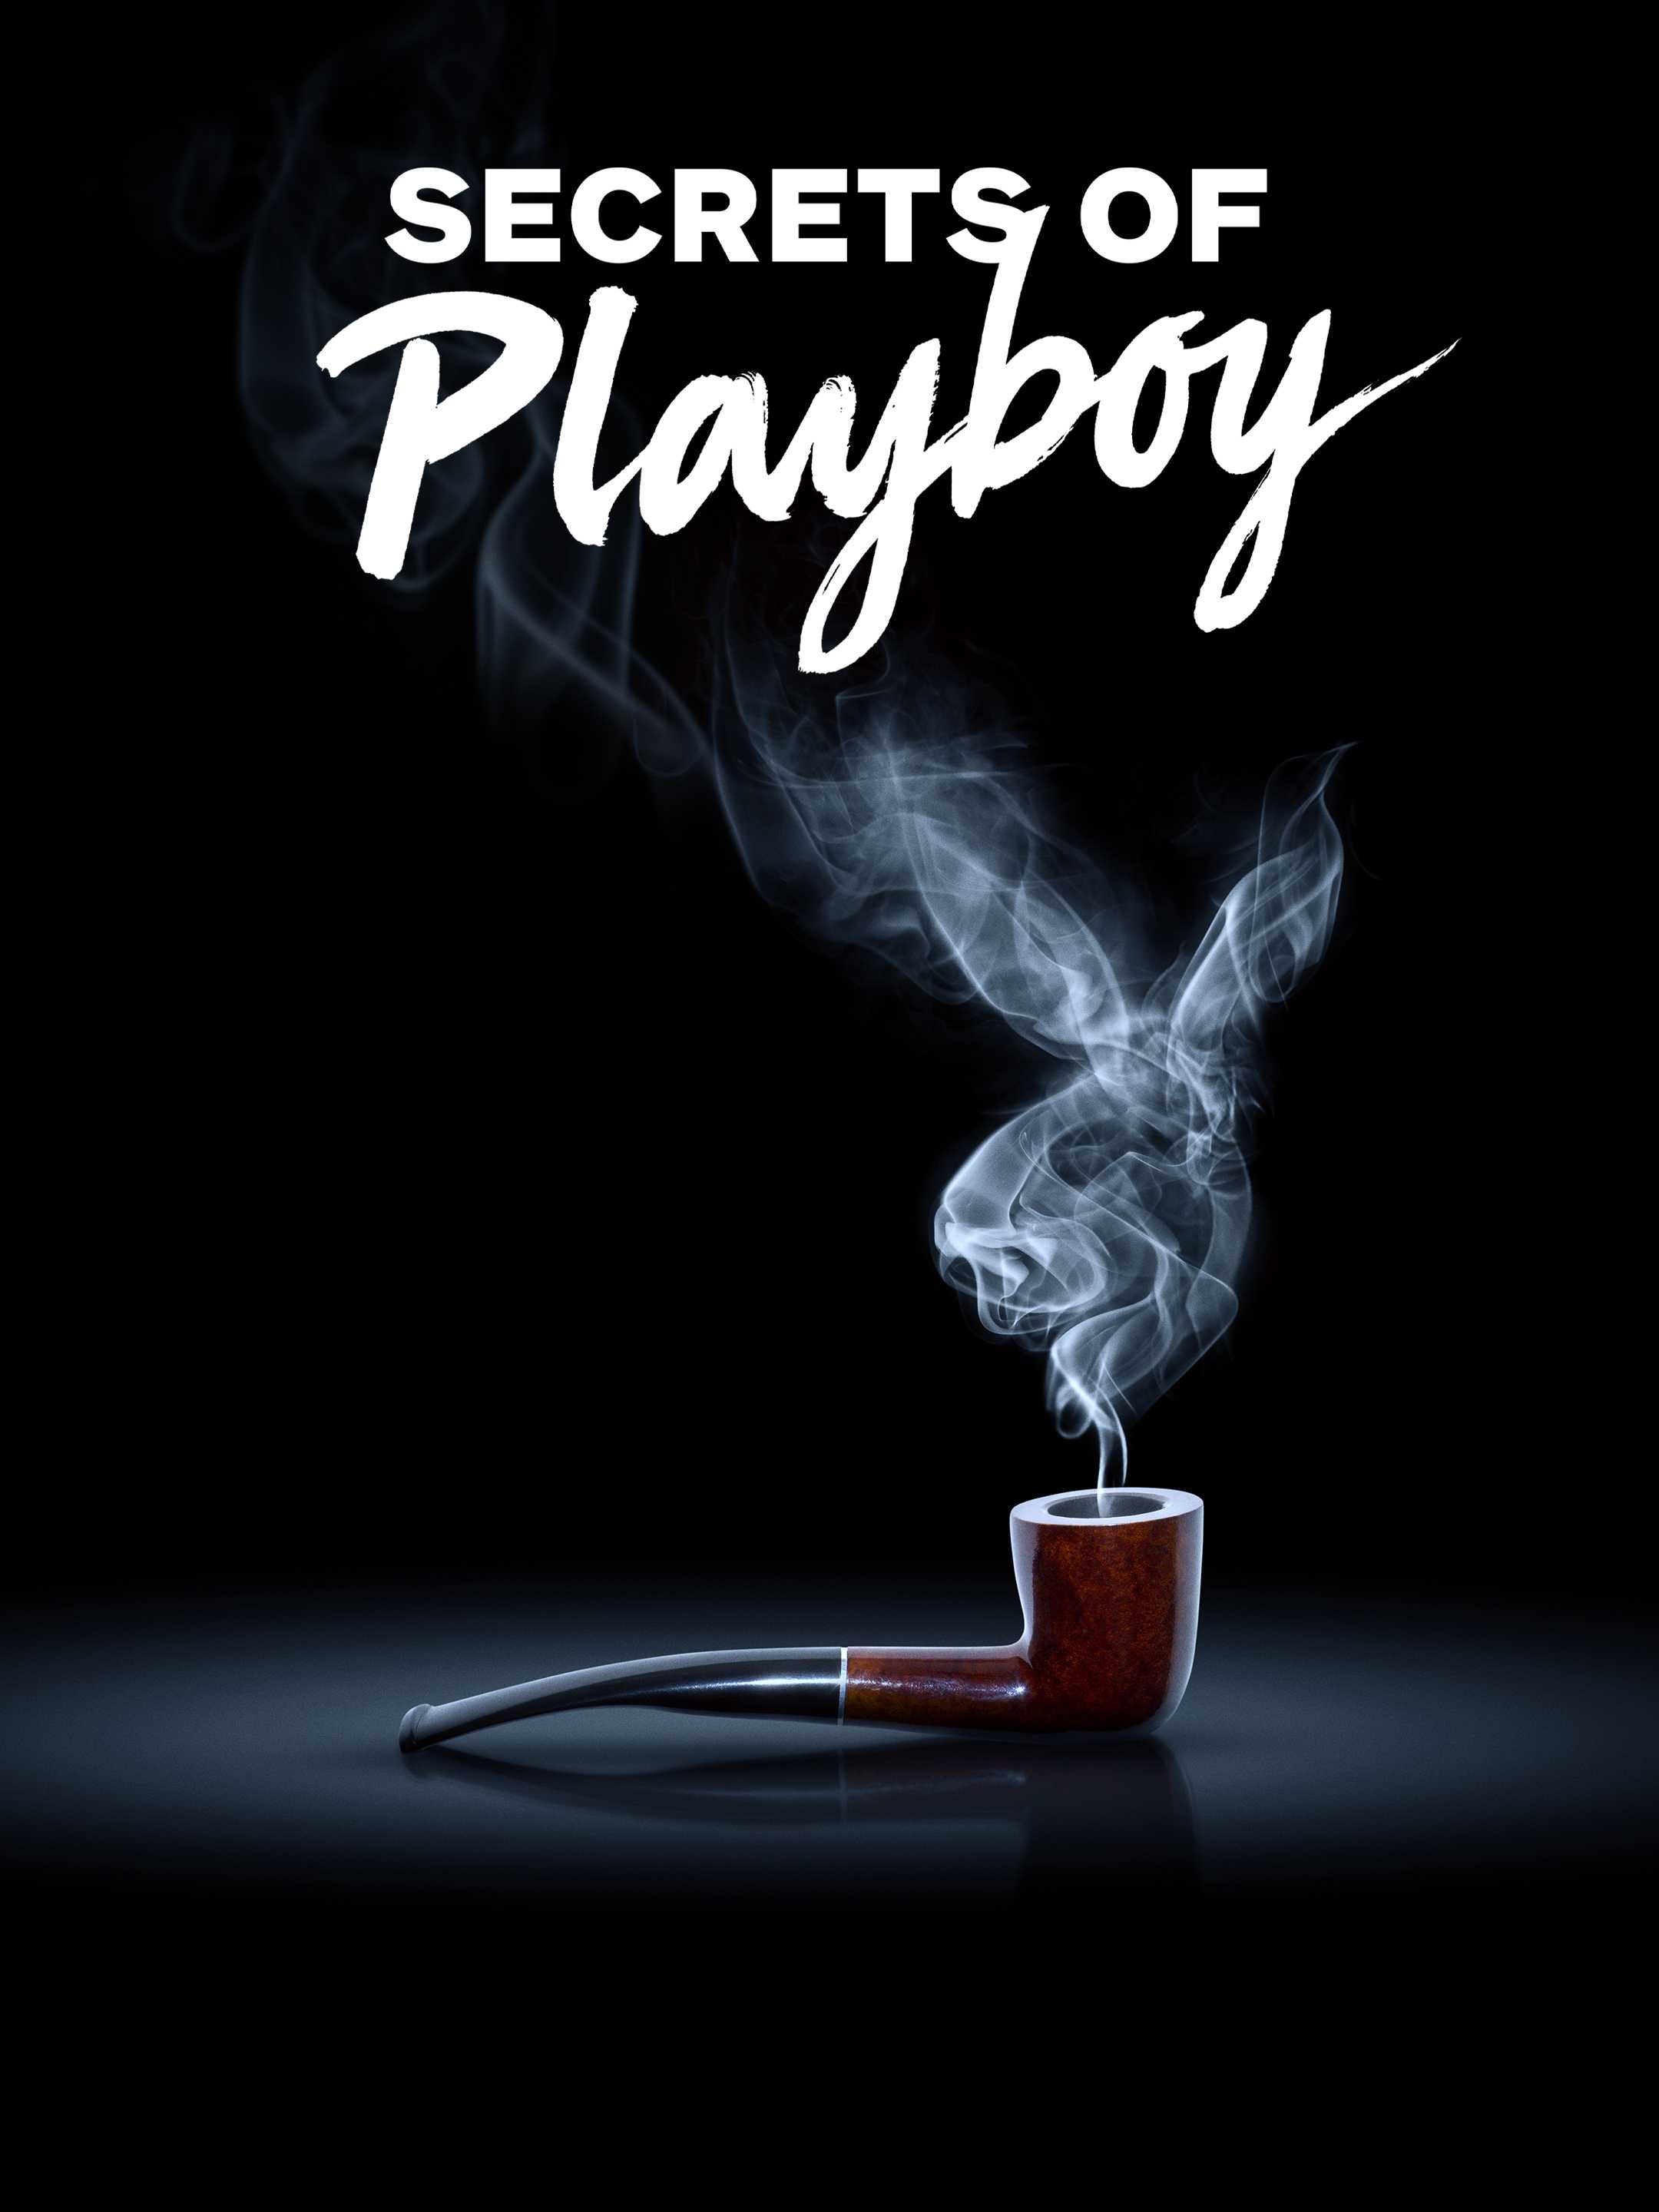 Playboy Tv Free Stream